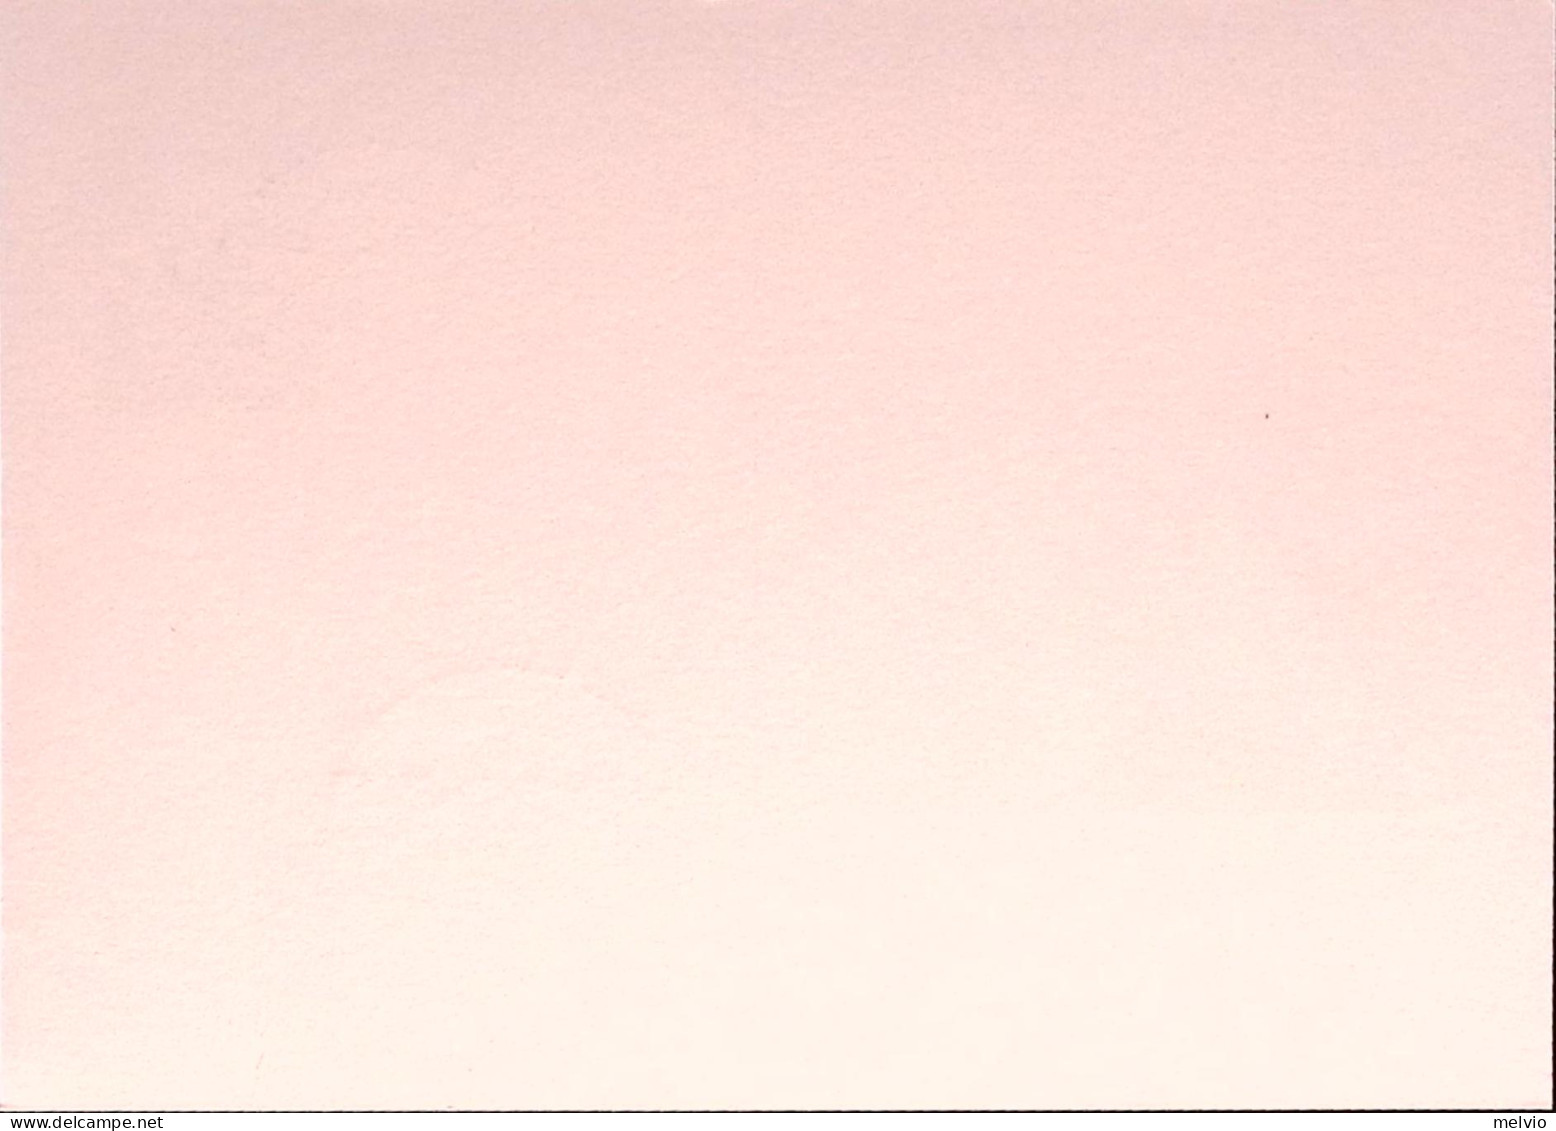 1995-FUNGHI E CASTAGNE Cartolina Postale IPZS Lire 700 Ann Spec - Postwaardestukken